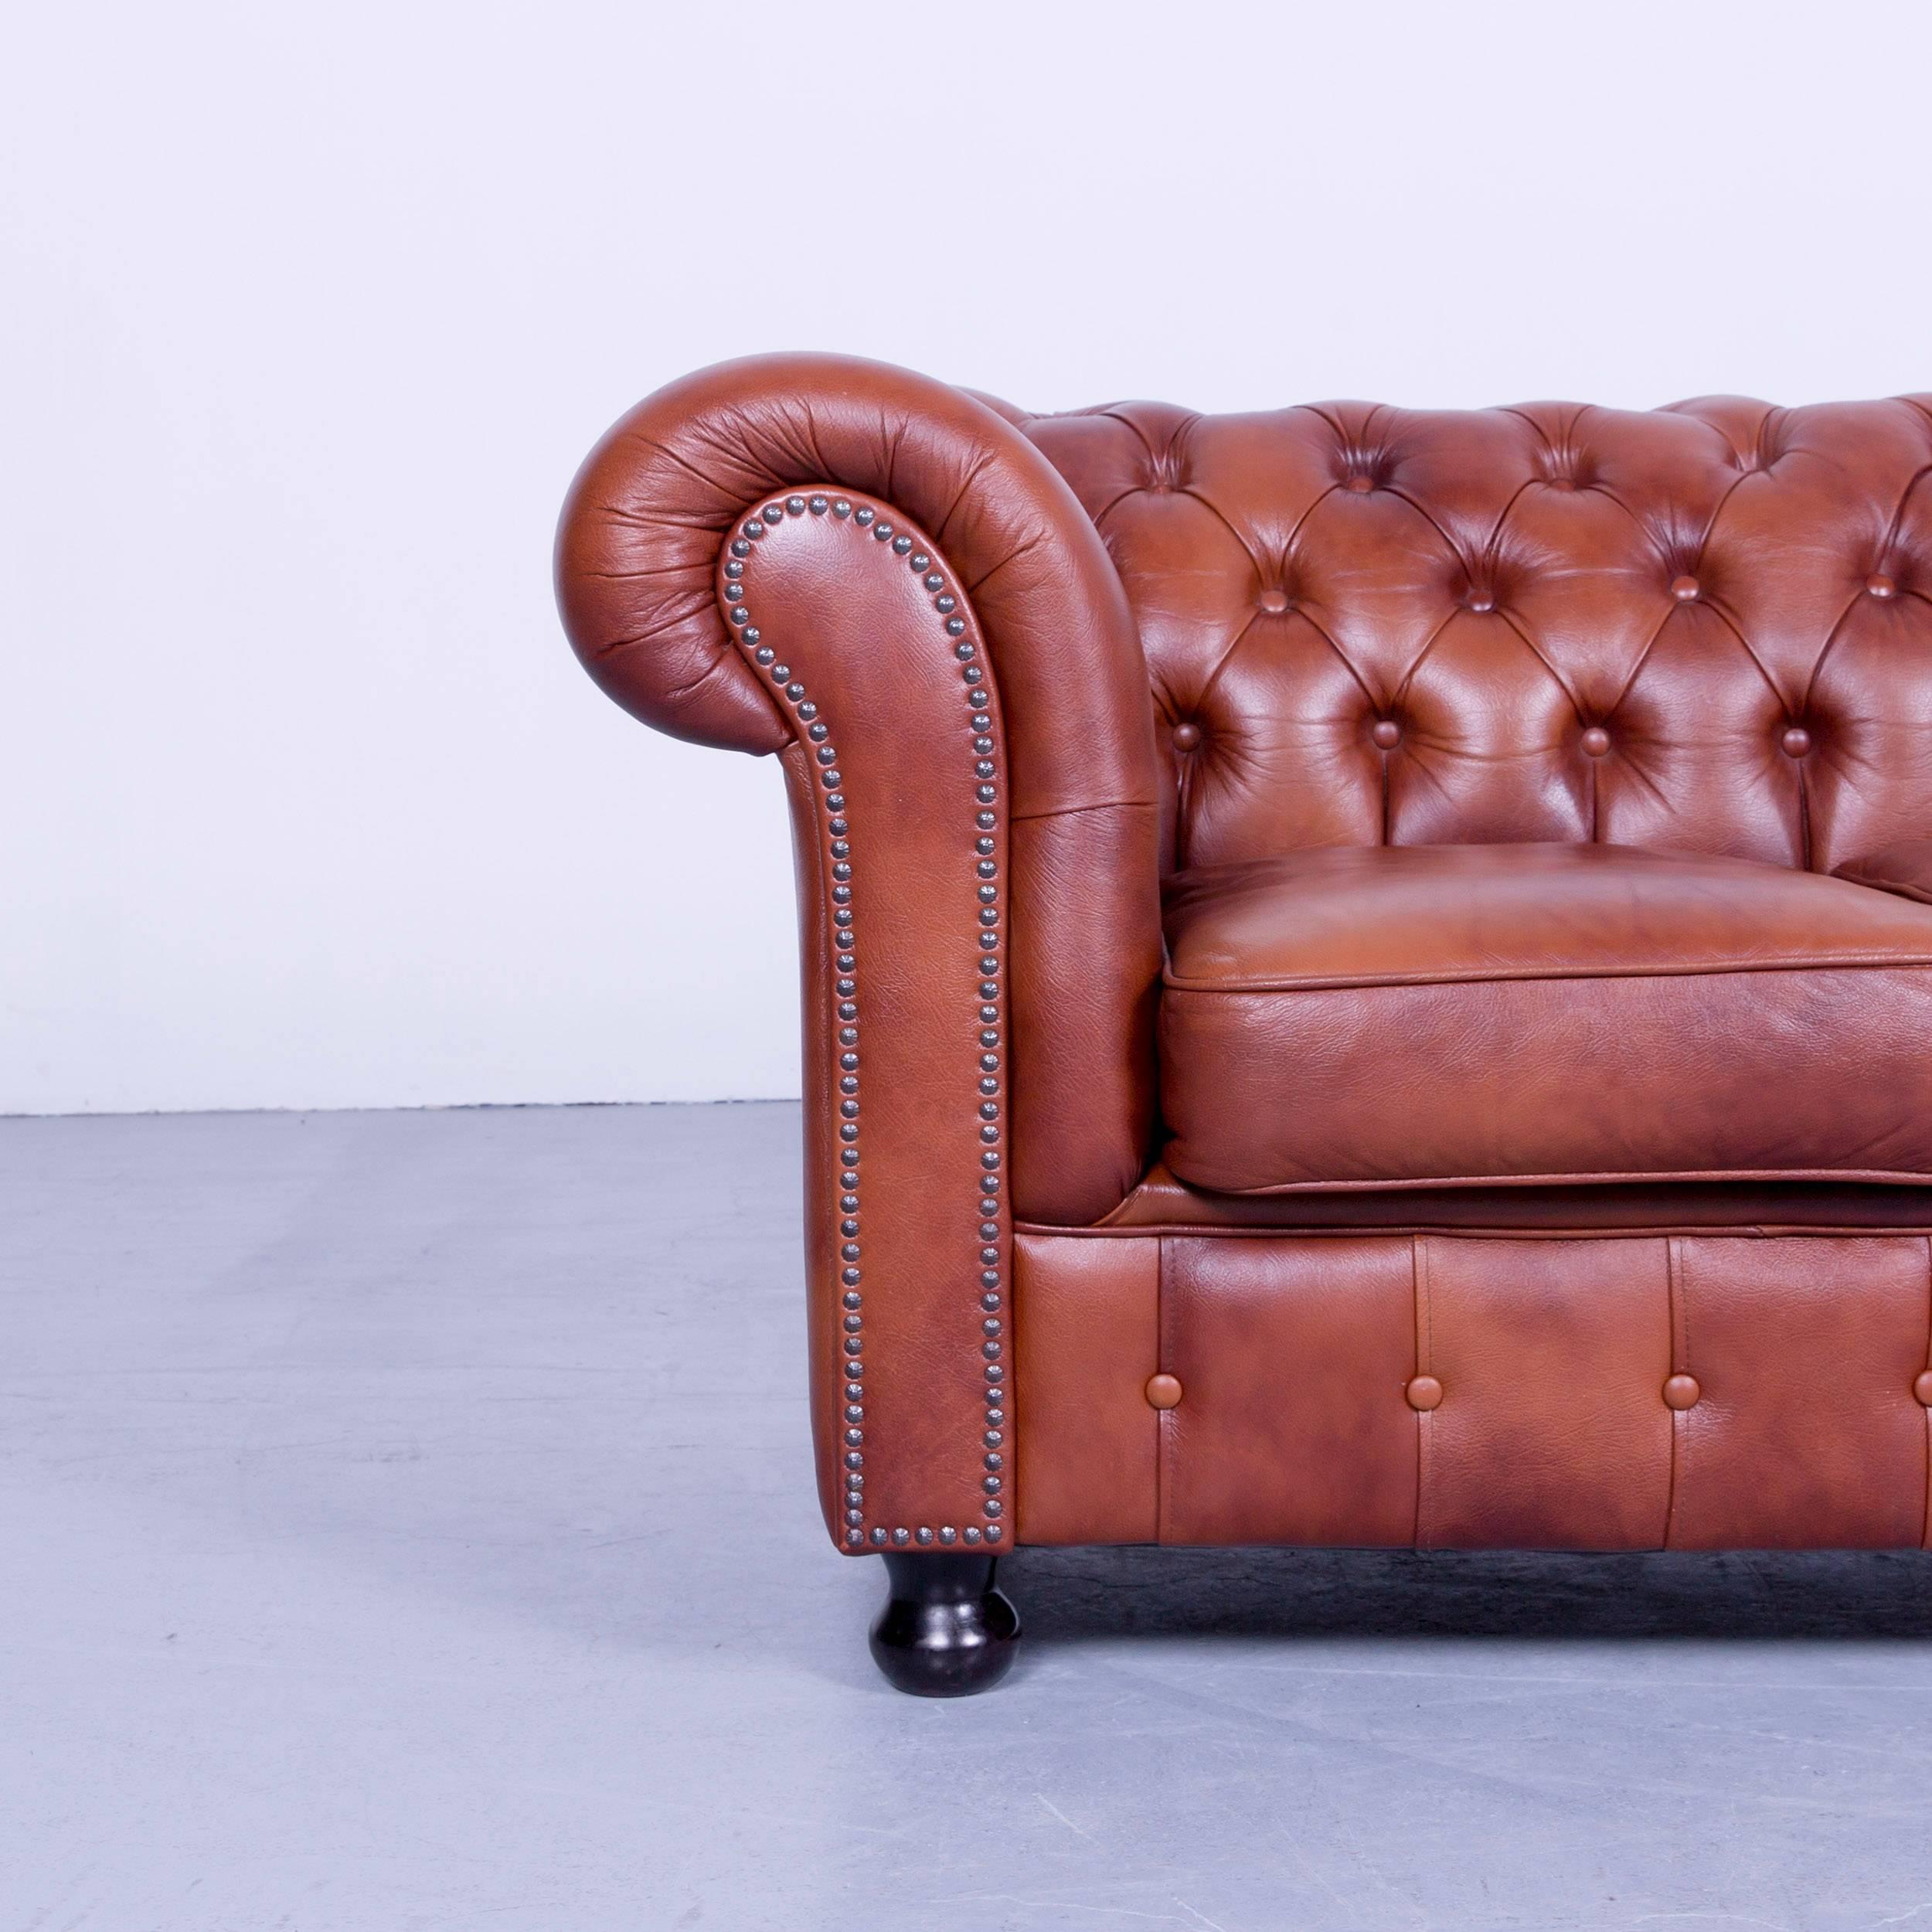 Chesterfield three-seat sofa brown orange cognac vintage retro handmade rivets.